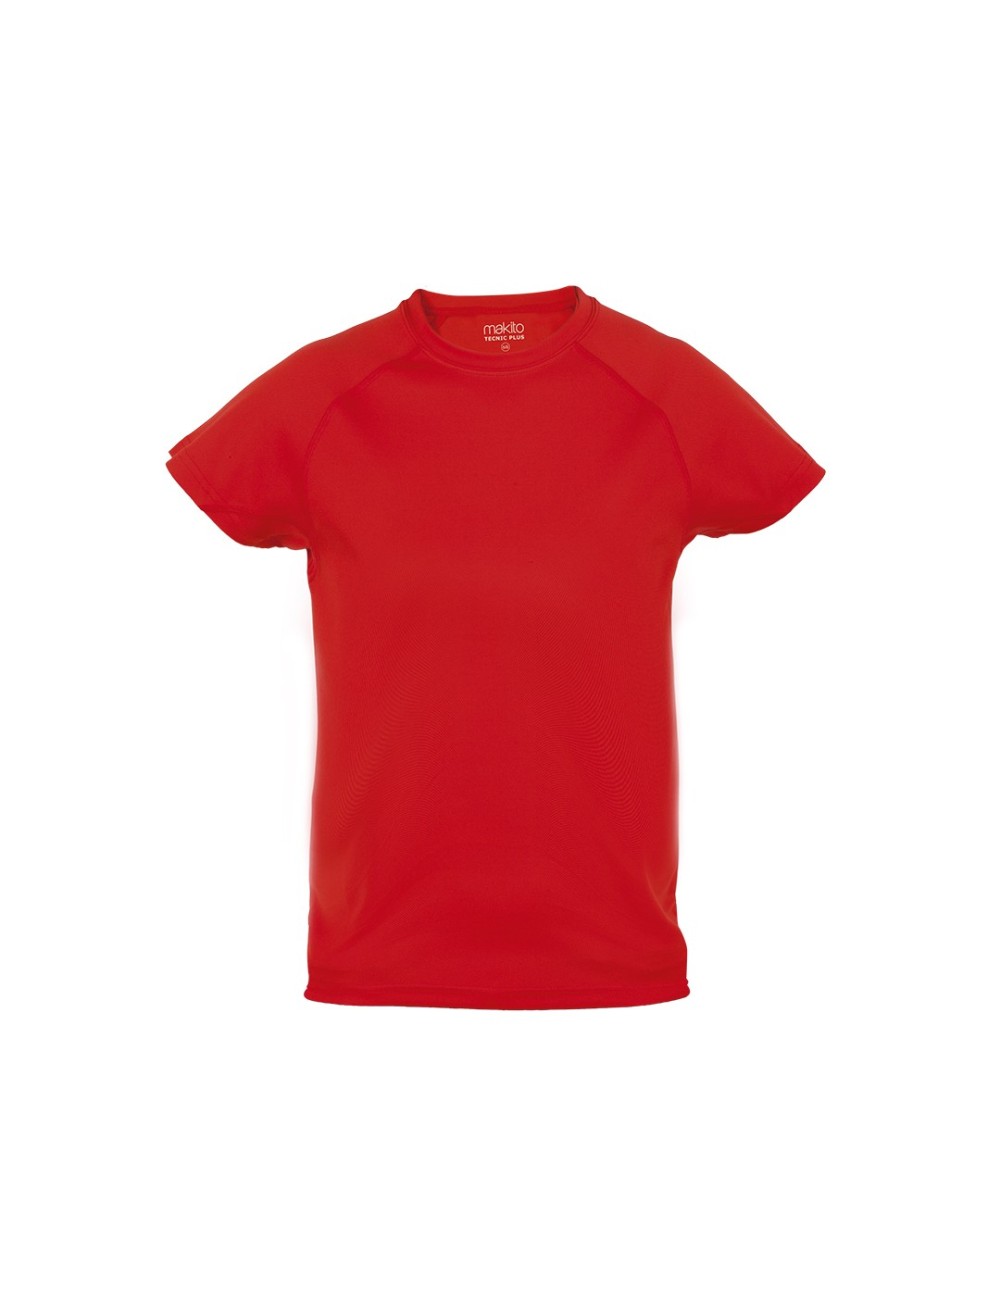 T-Shirt Criança Tecnic Plus